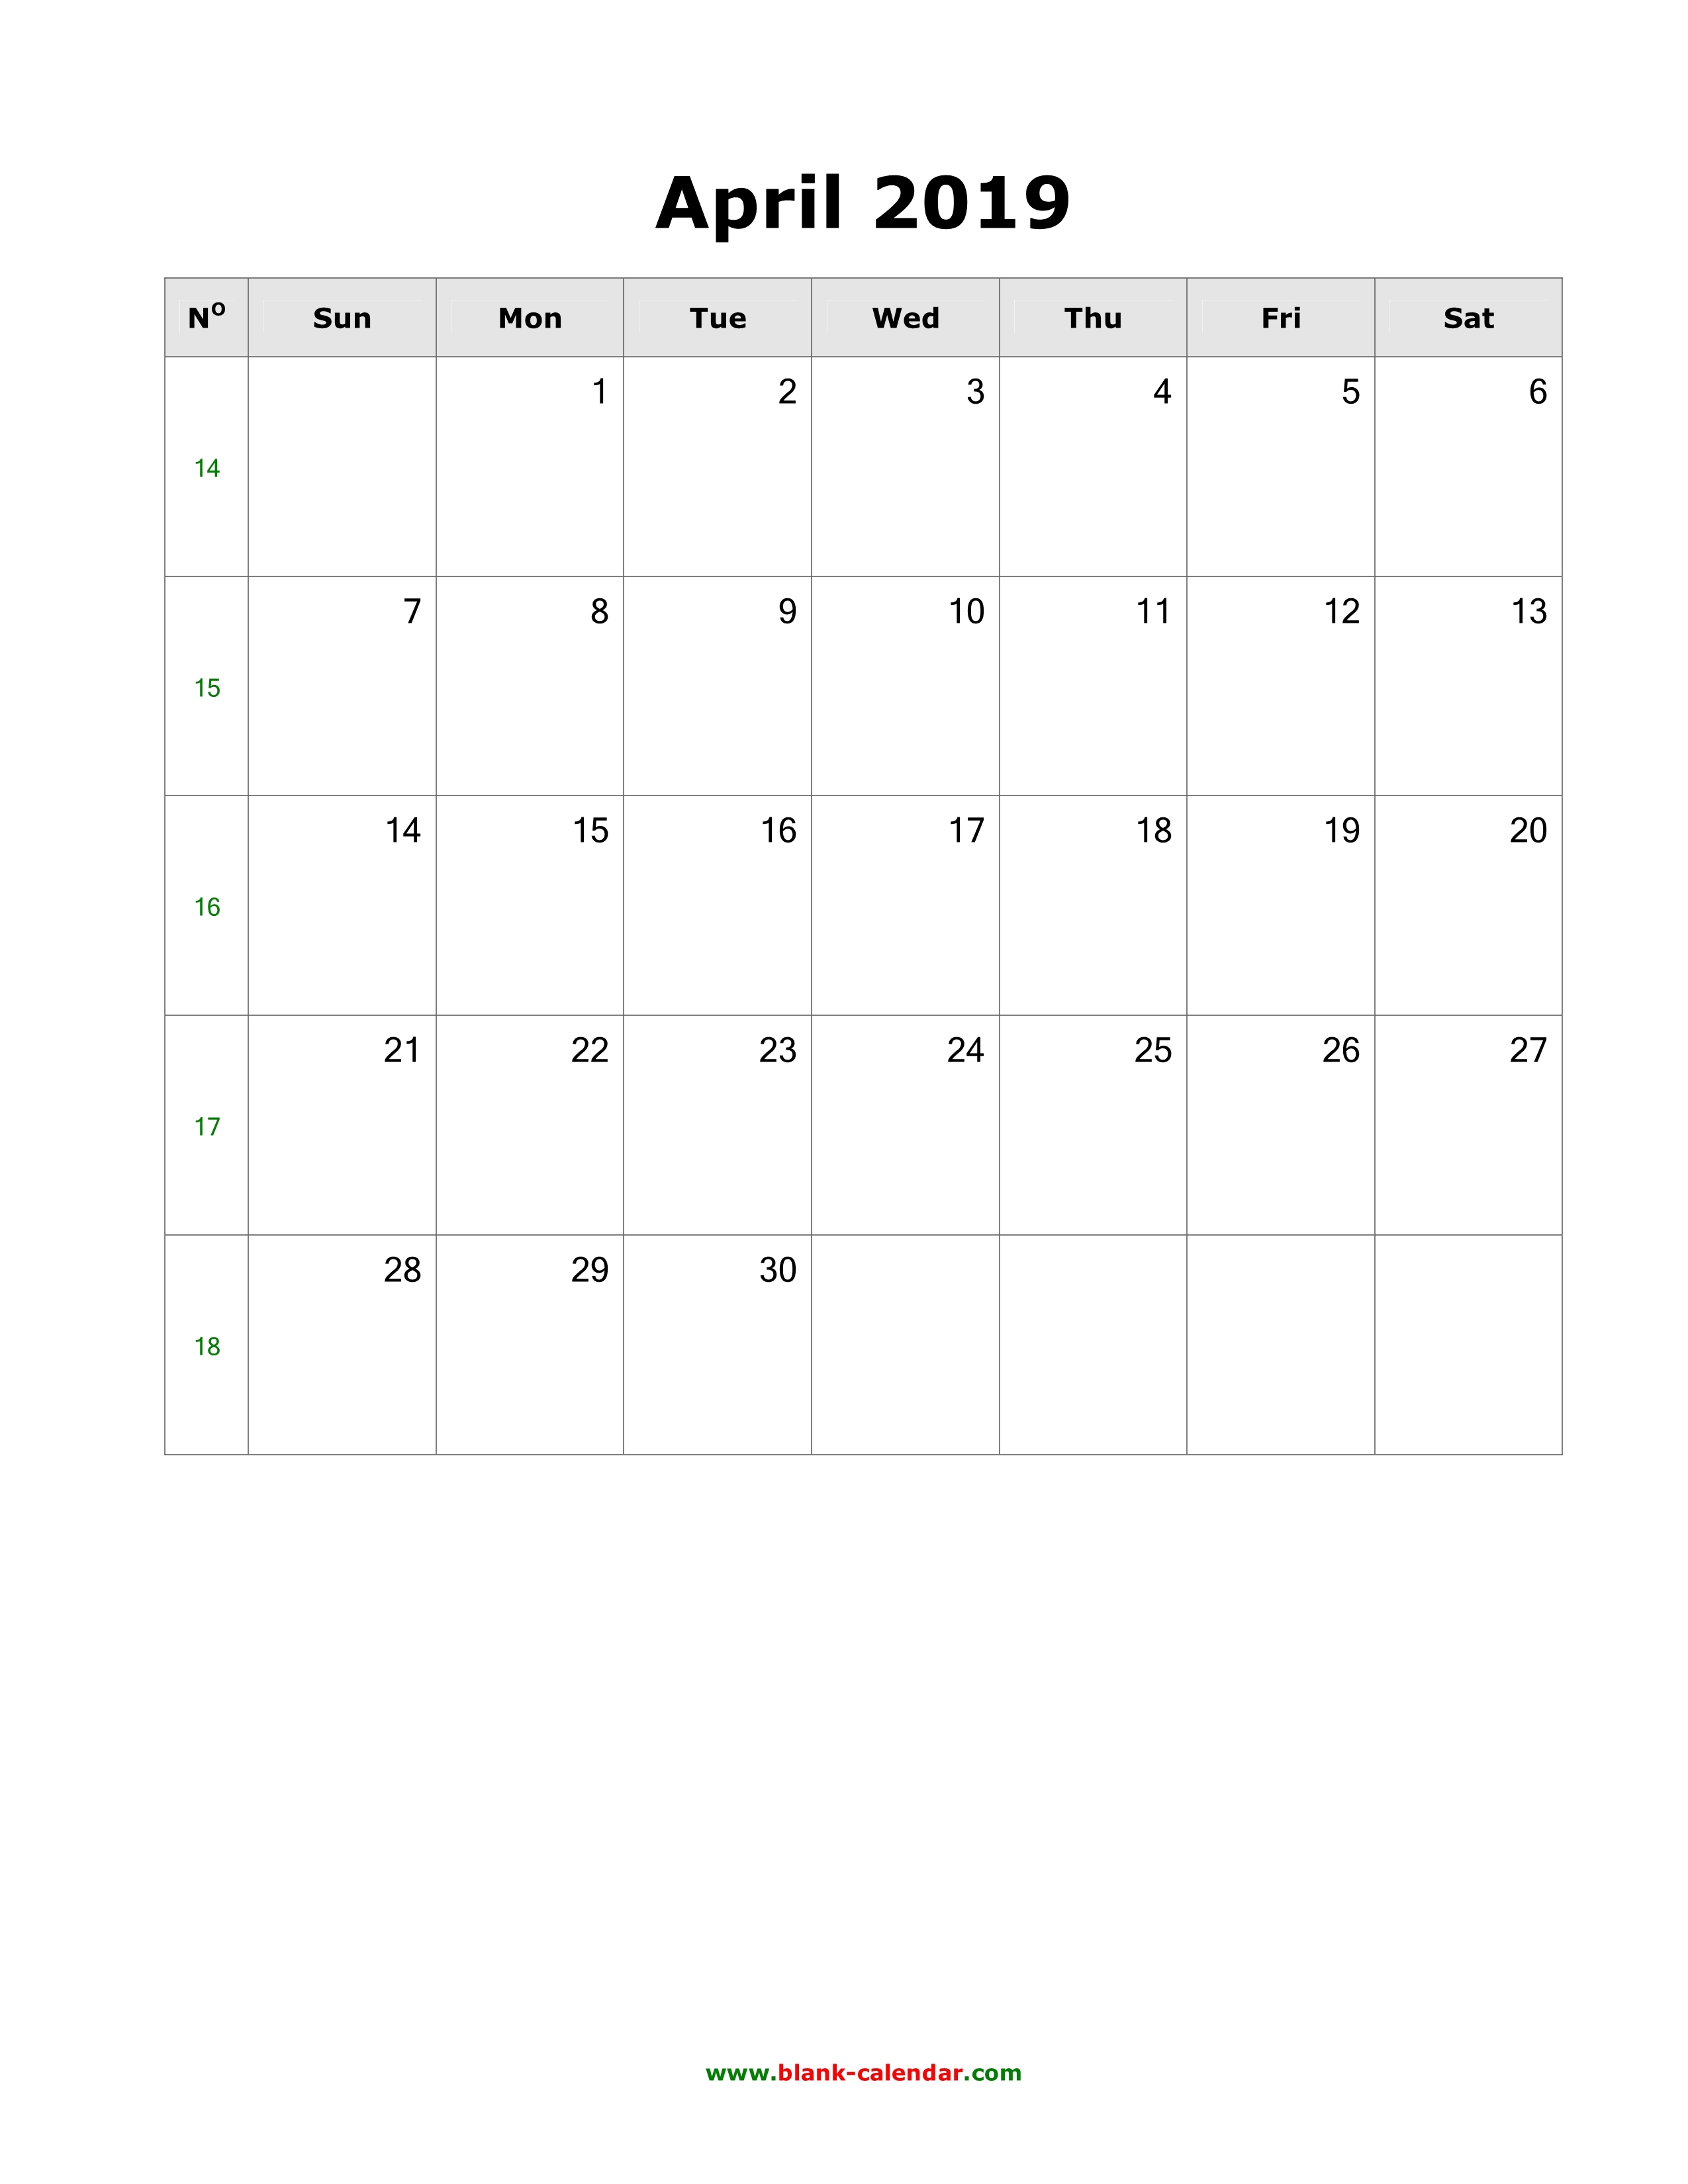 Download April 2019 Blank Calendar Vertical